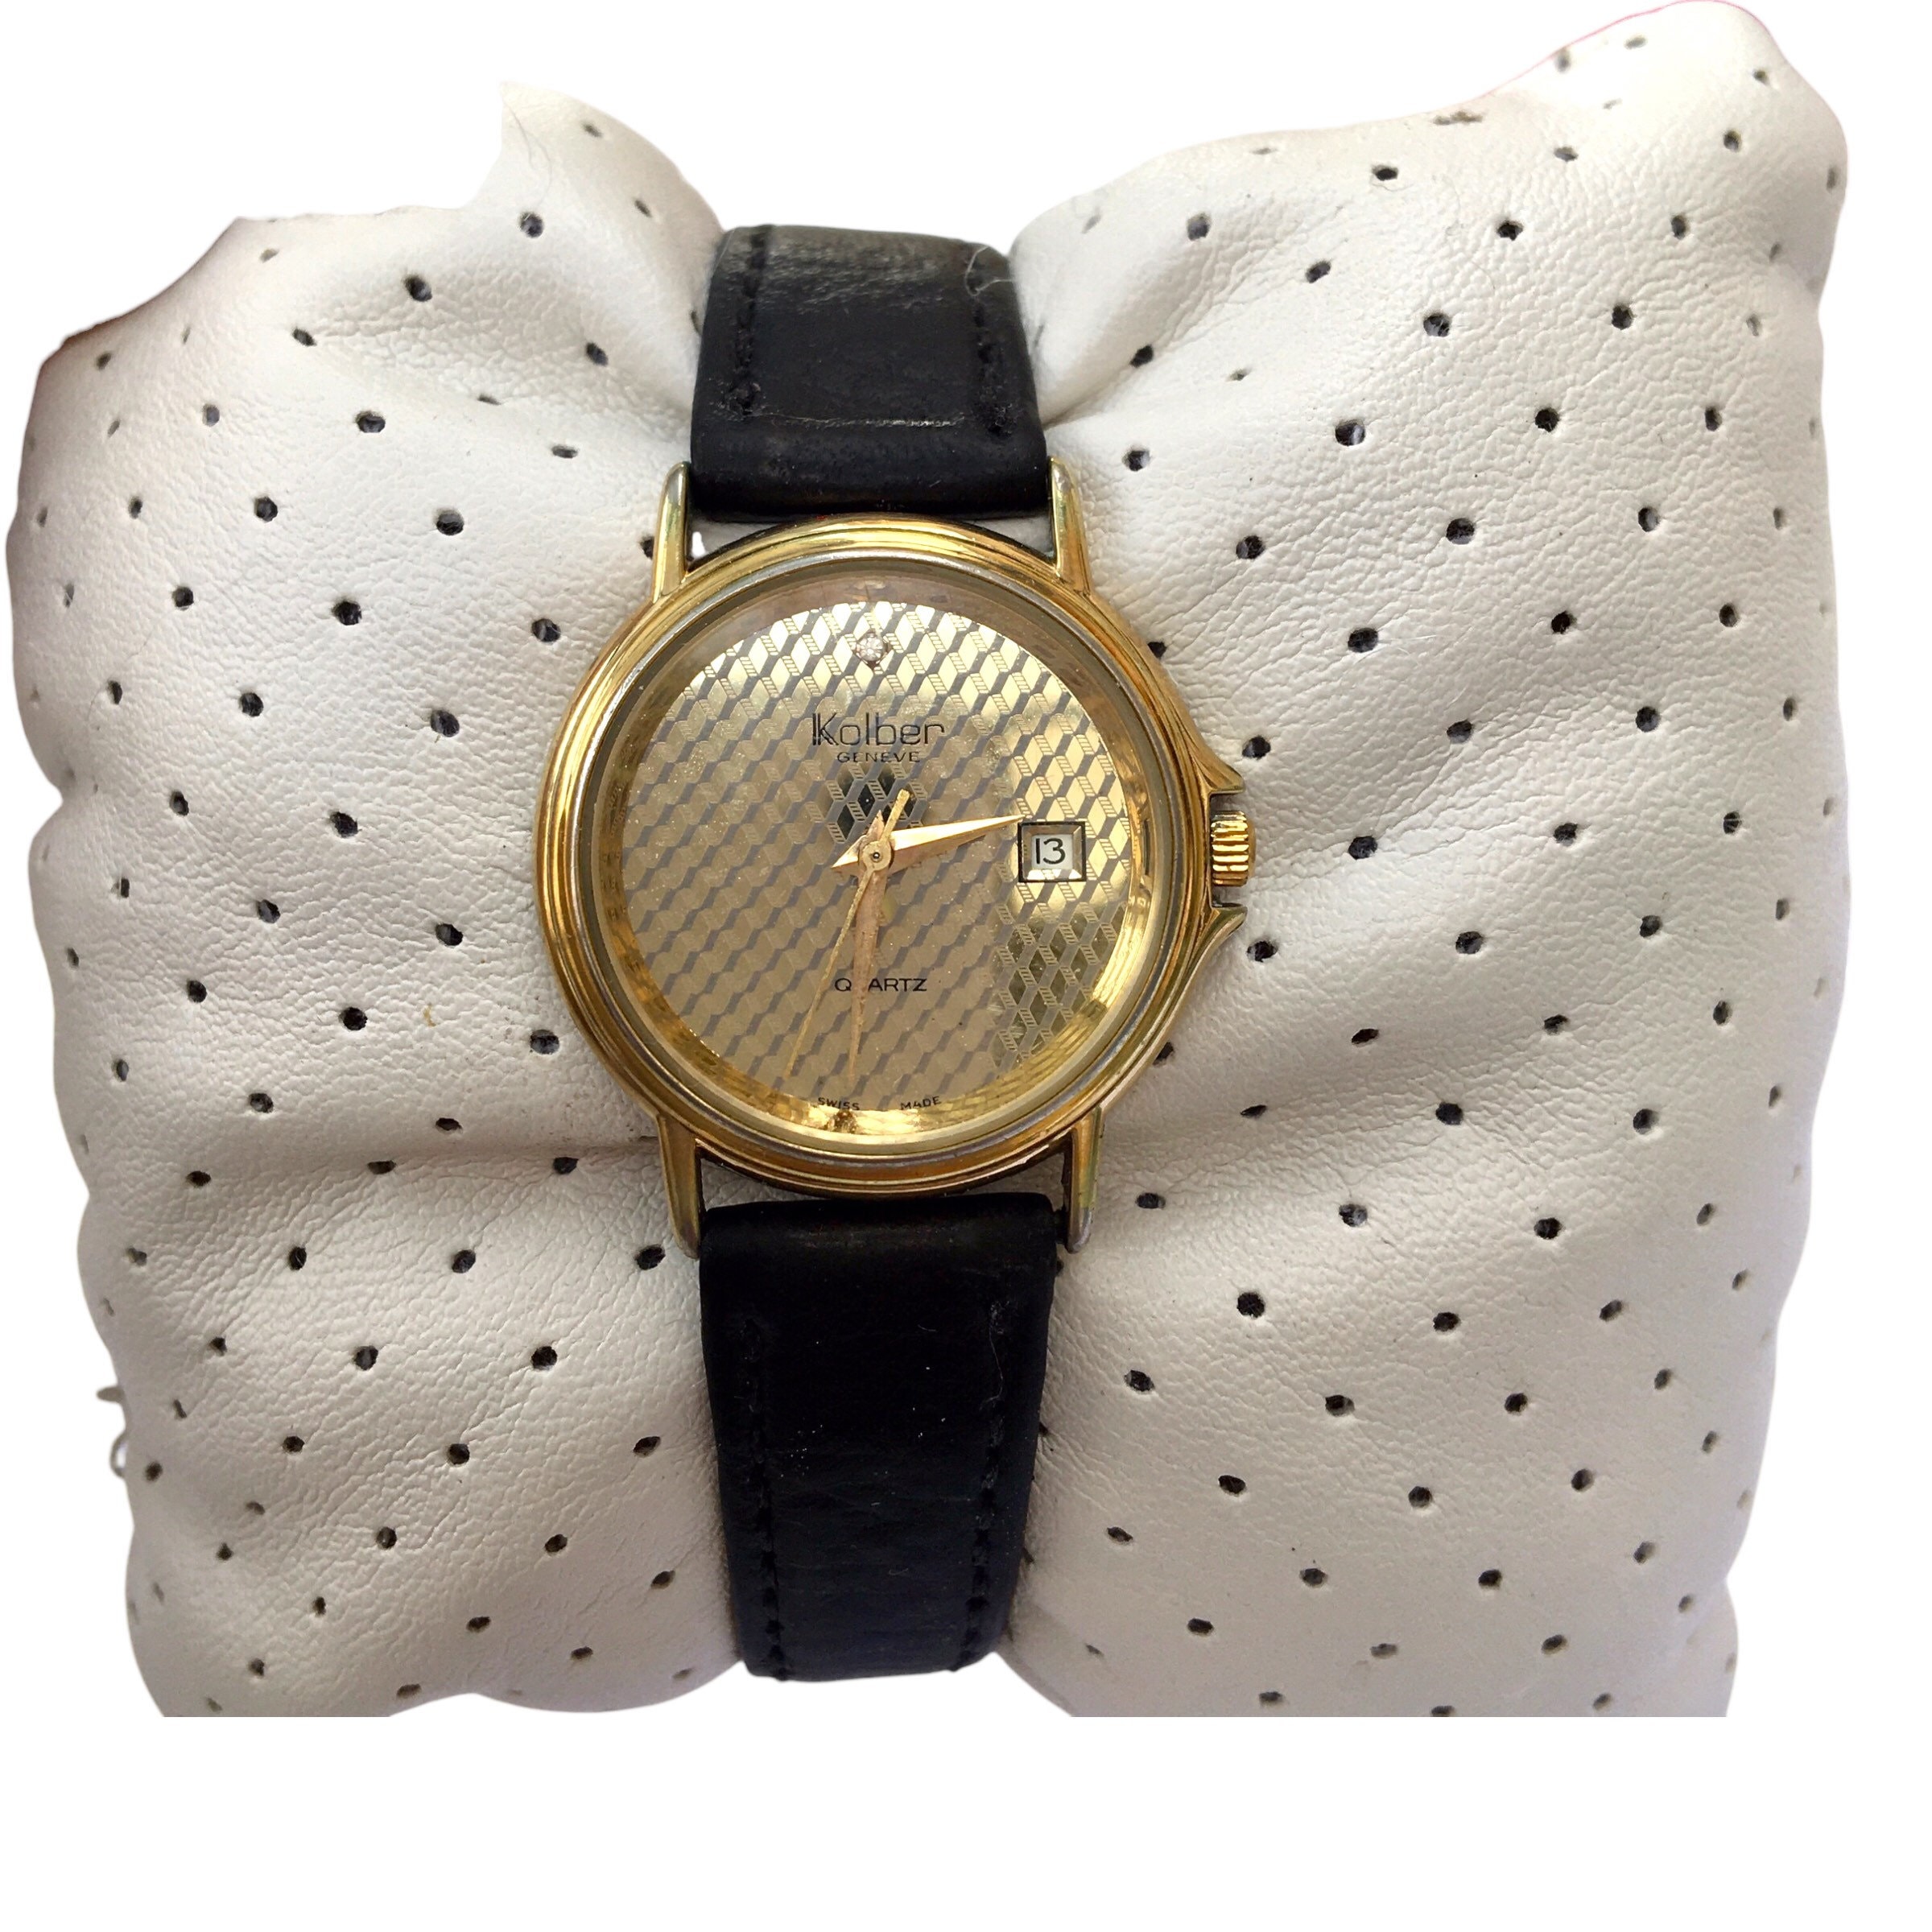 Vintage Kolber Geneve Swiss Made Quartz Watch - Etsy